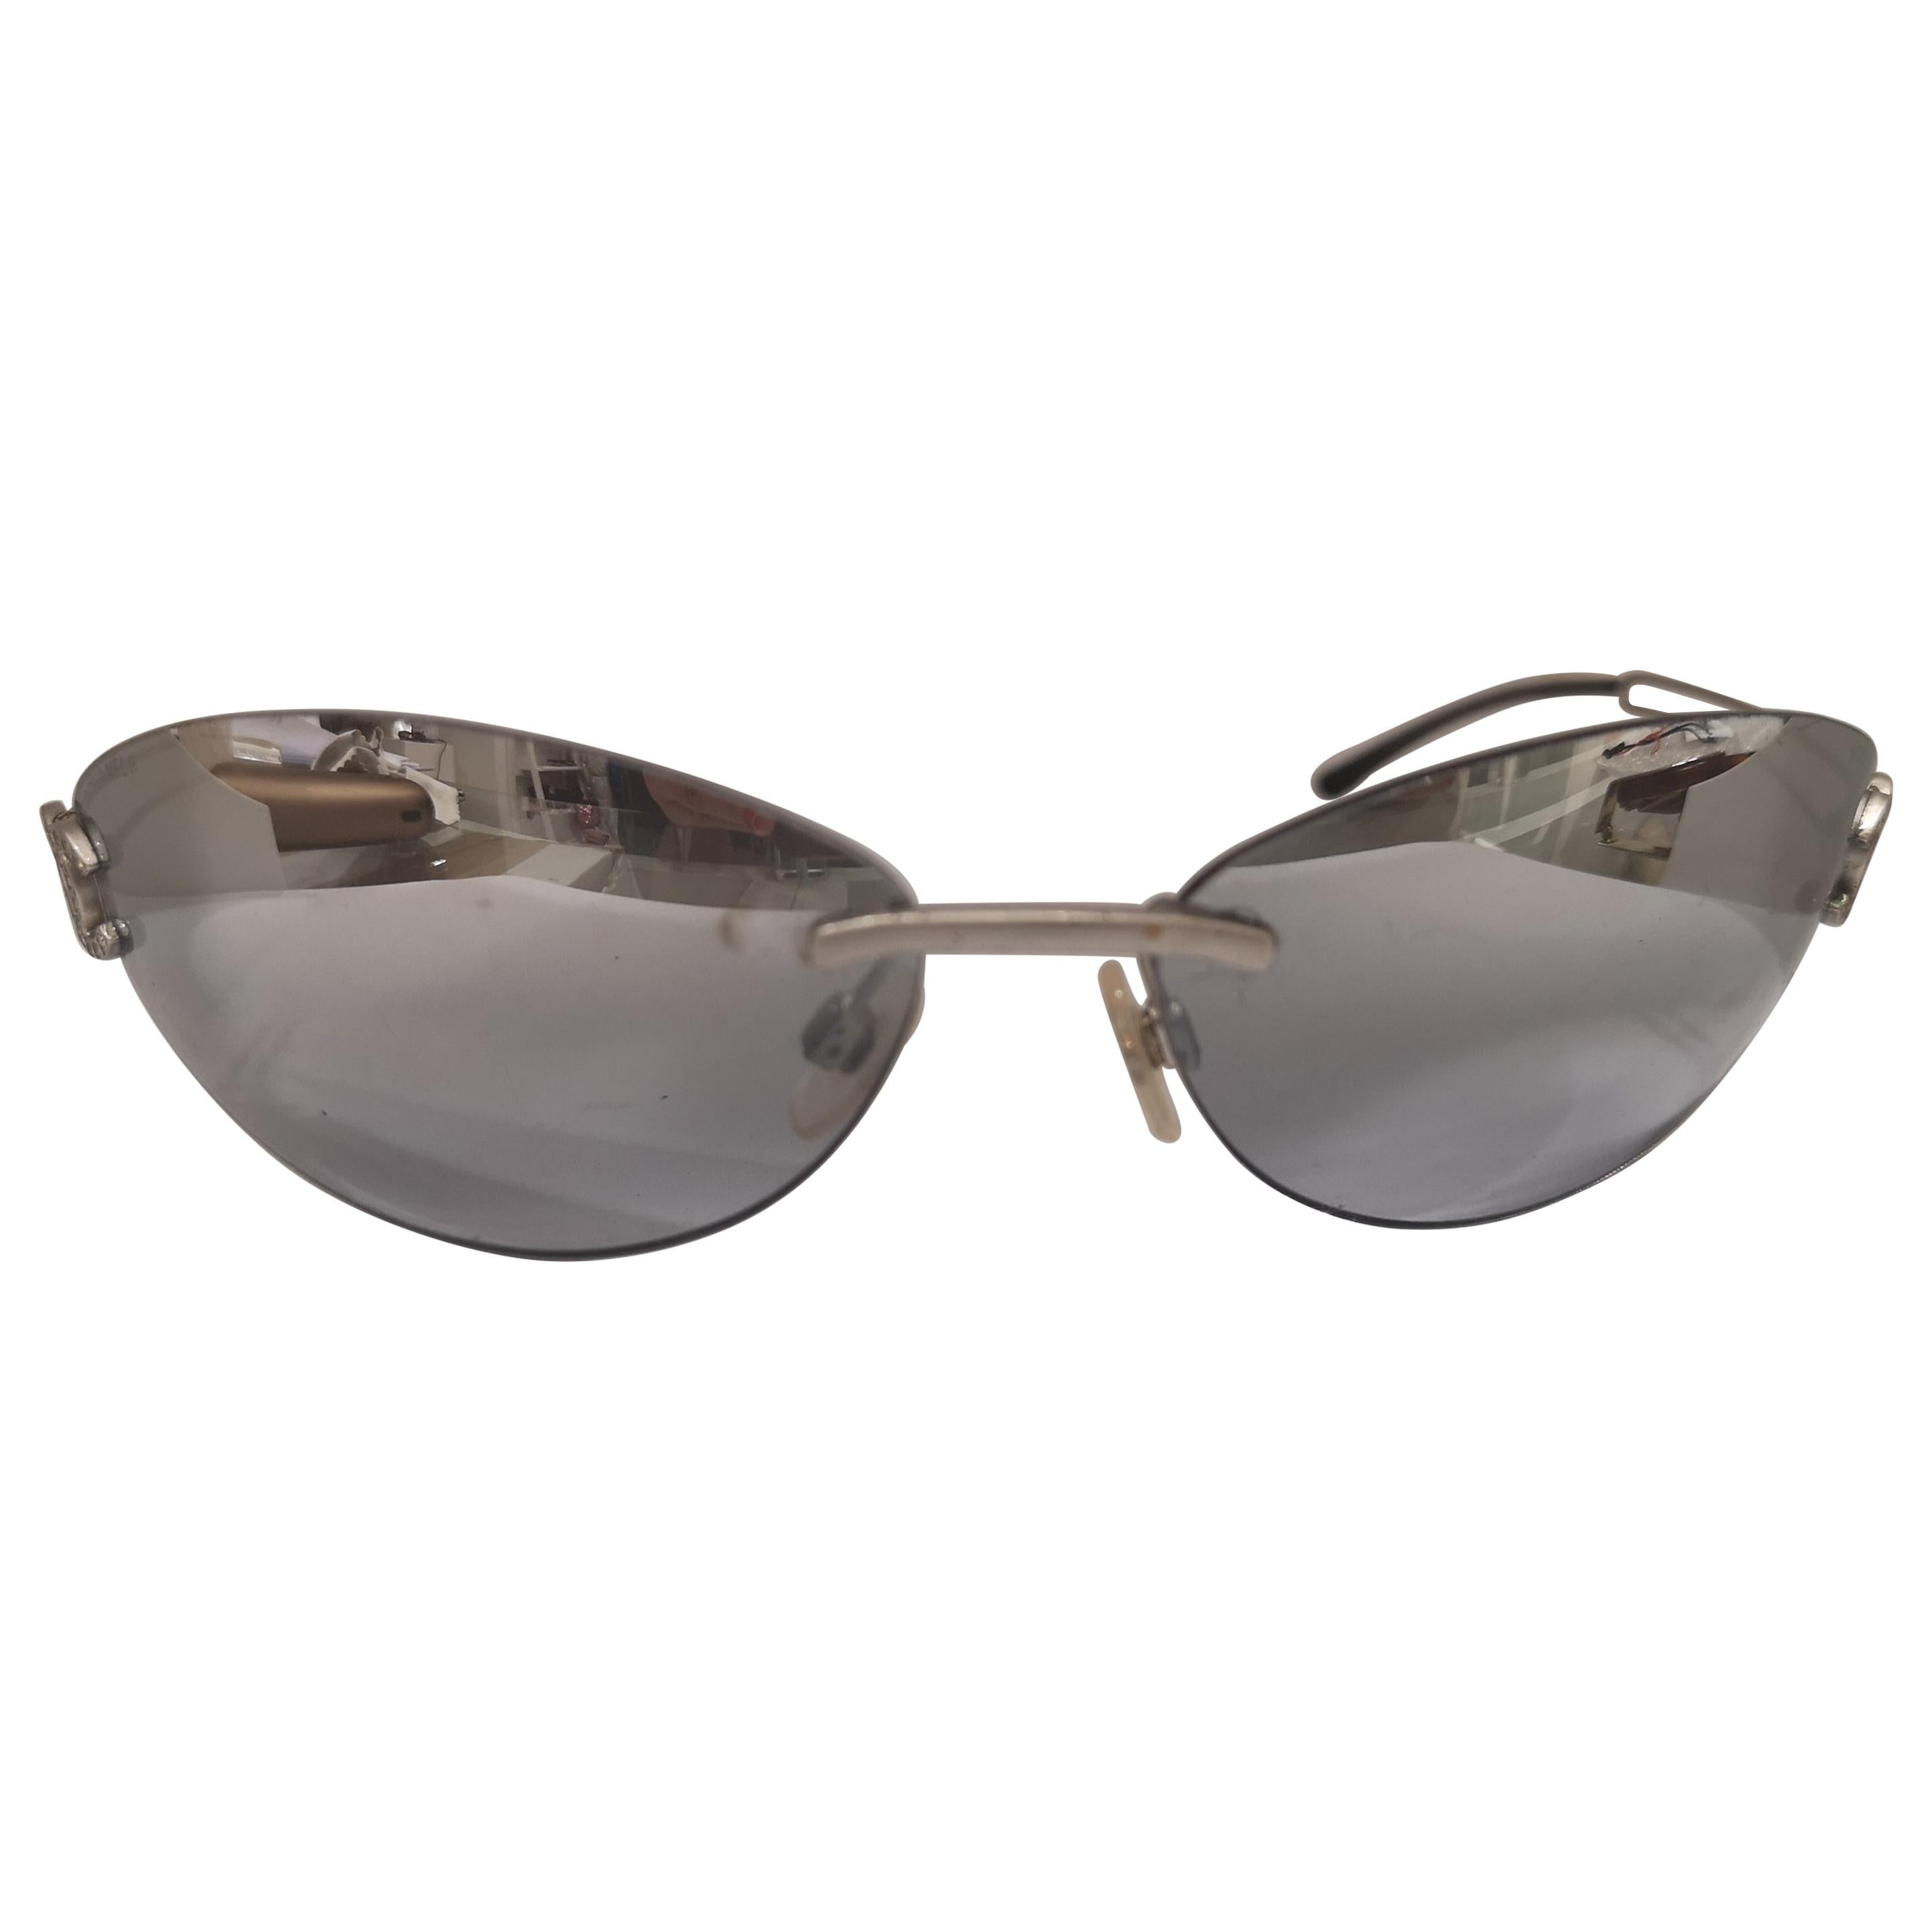 Chanel grey silver mirrored lens sunglasses